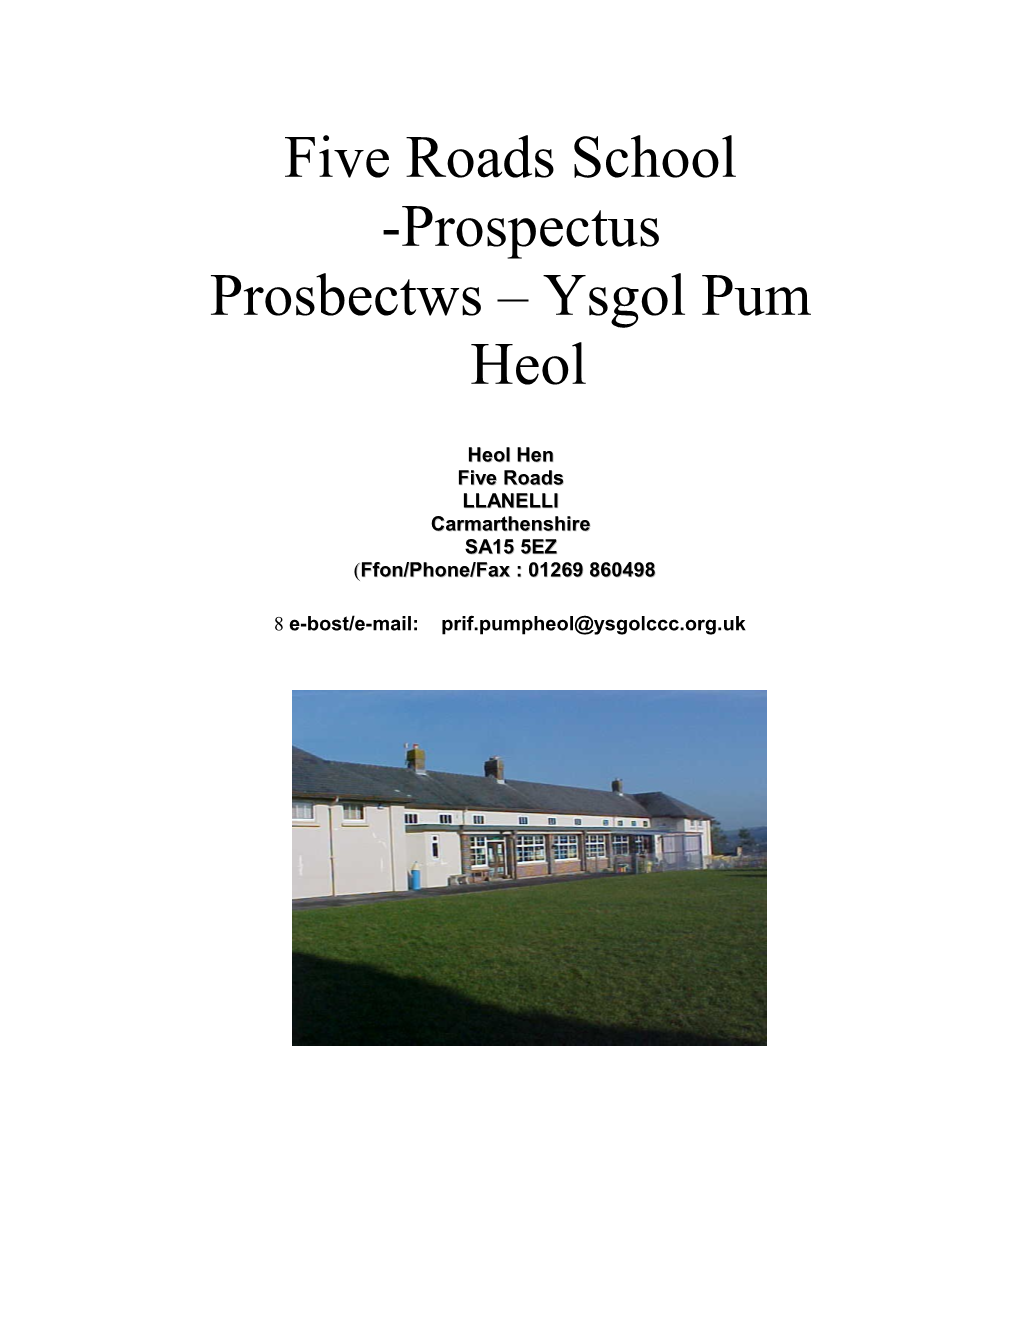 Five Roads School -Prospectus